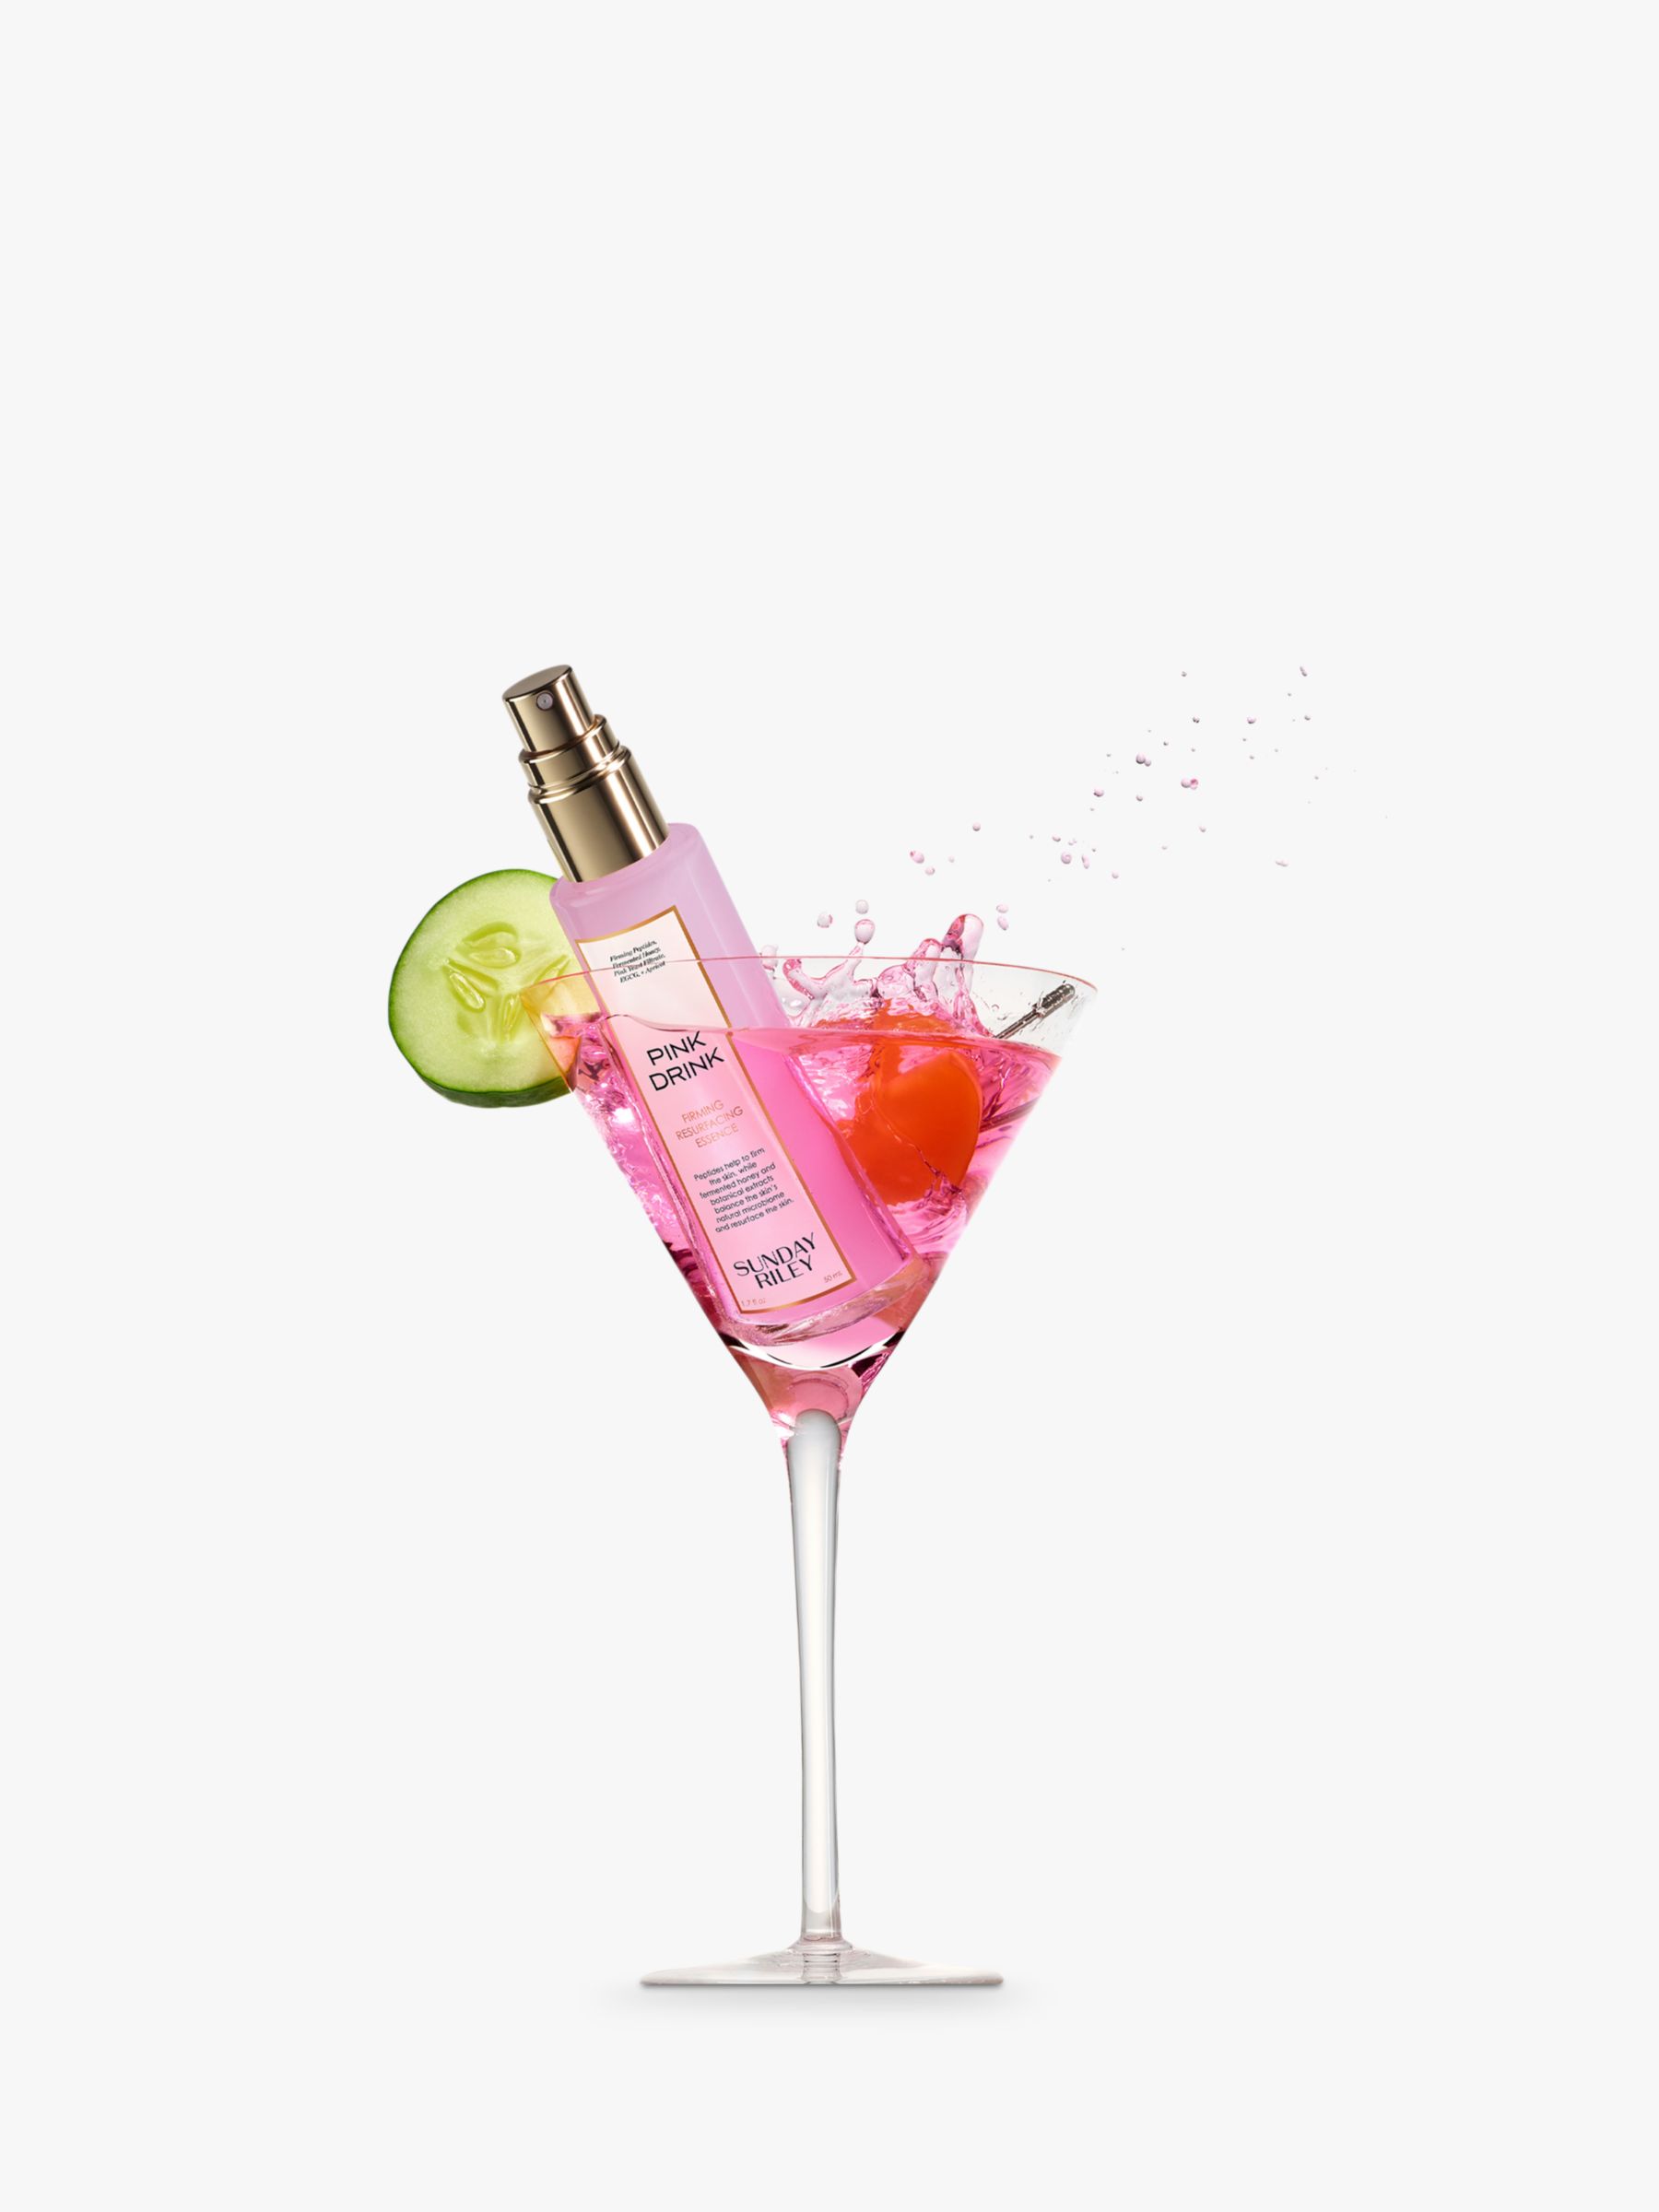 Sunday Riley Pink Drink Resurfacing Essence, 50ml